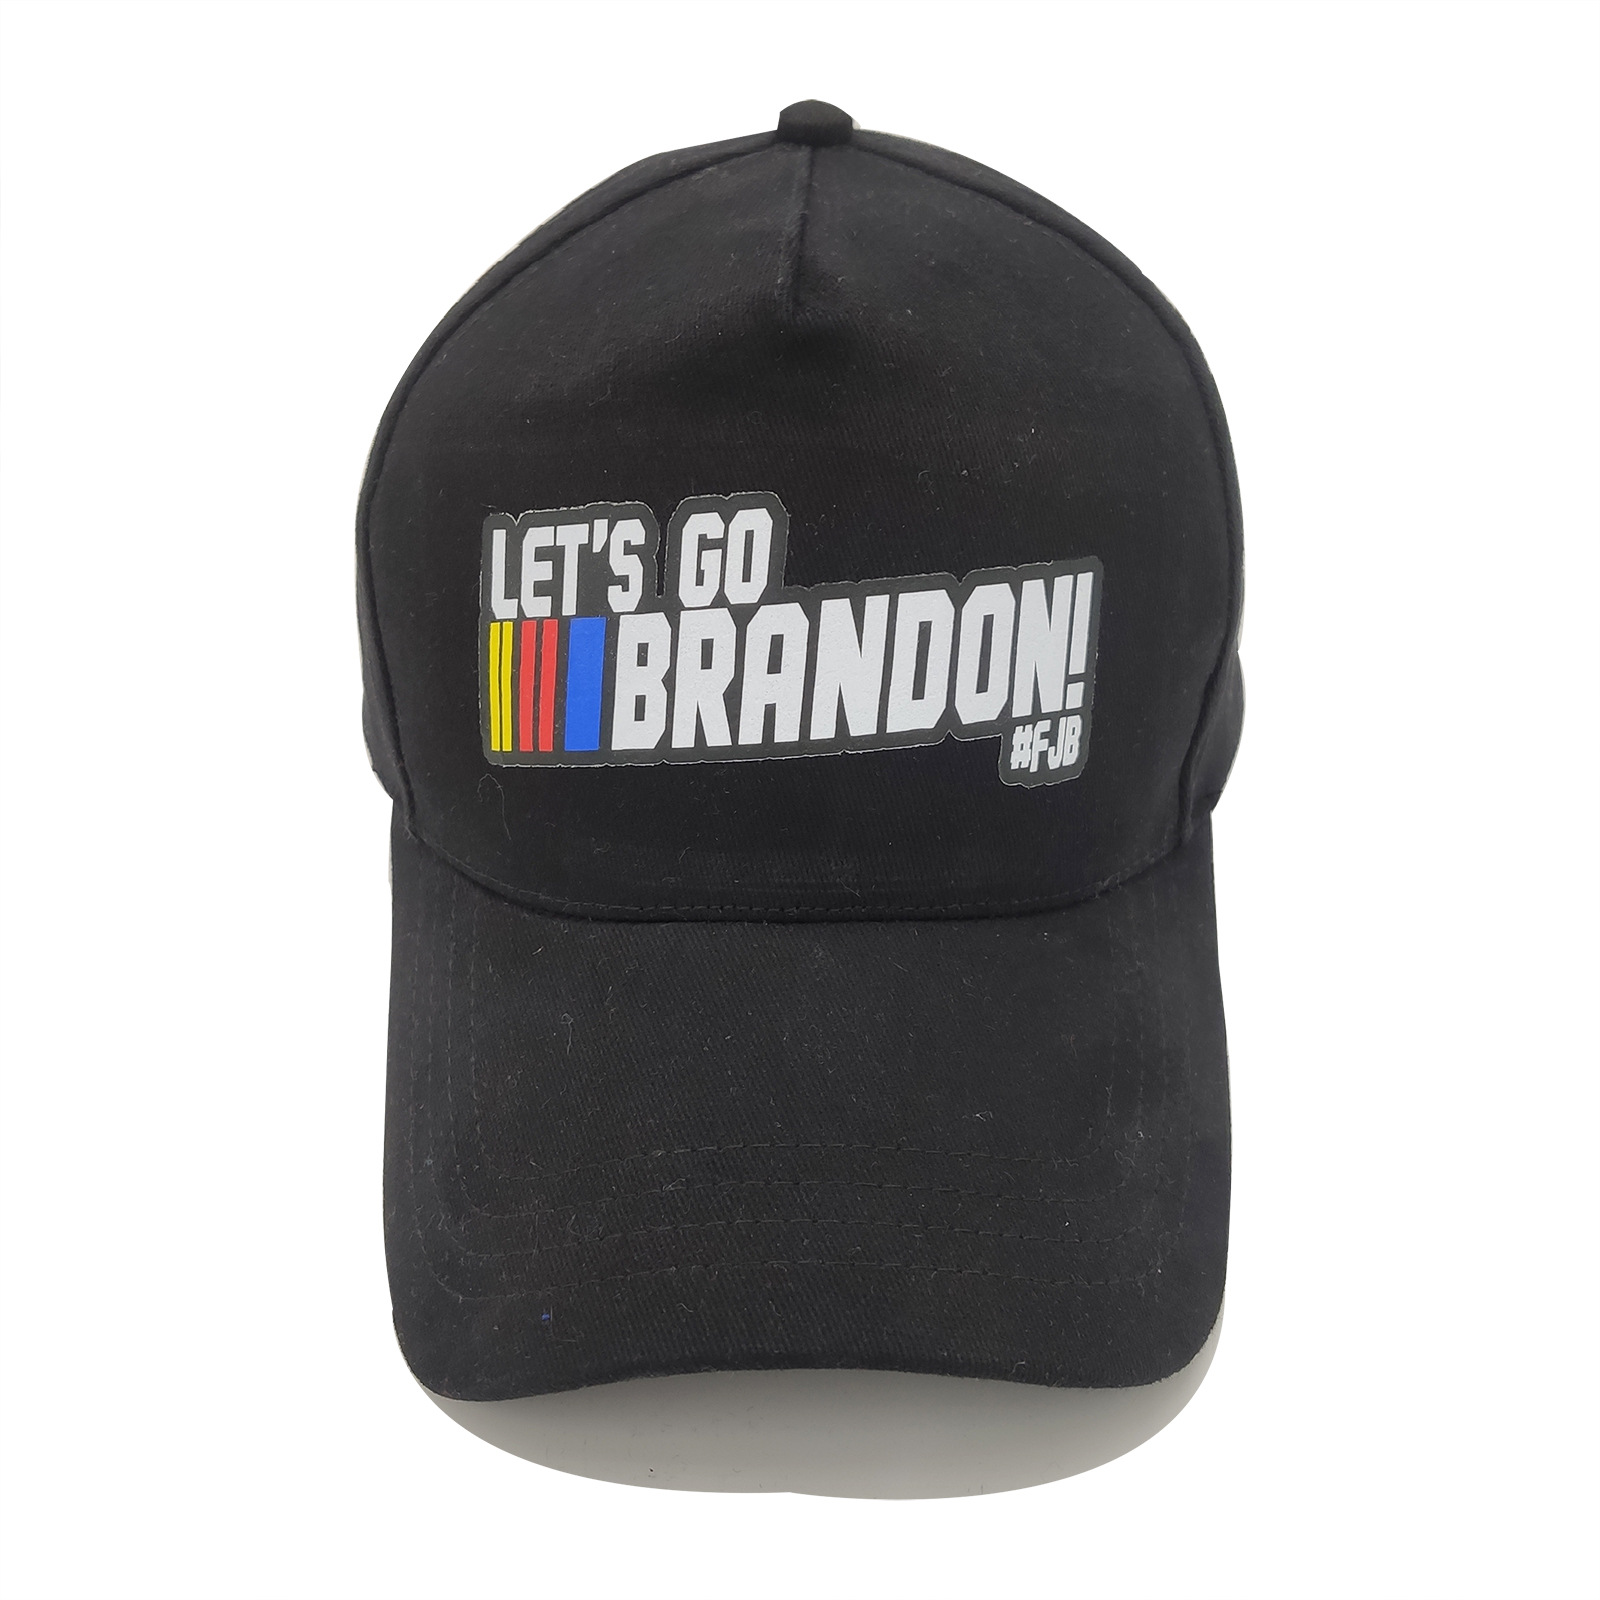 American New Mocking Biden Let's Go Brandon Adult Men's and Women's Cotton Baseball Cap Sun Hat